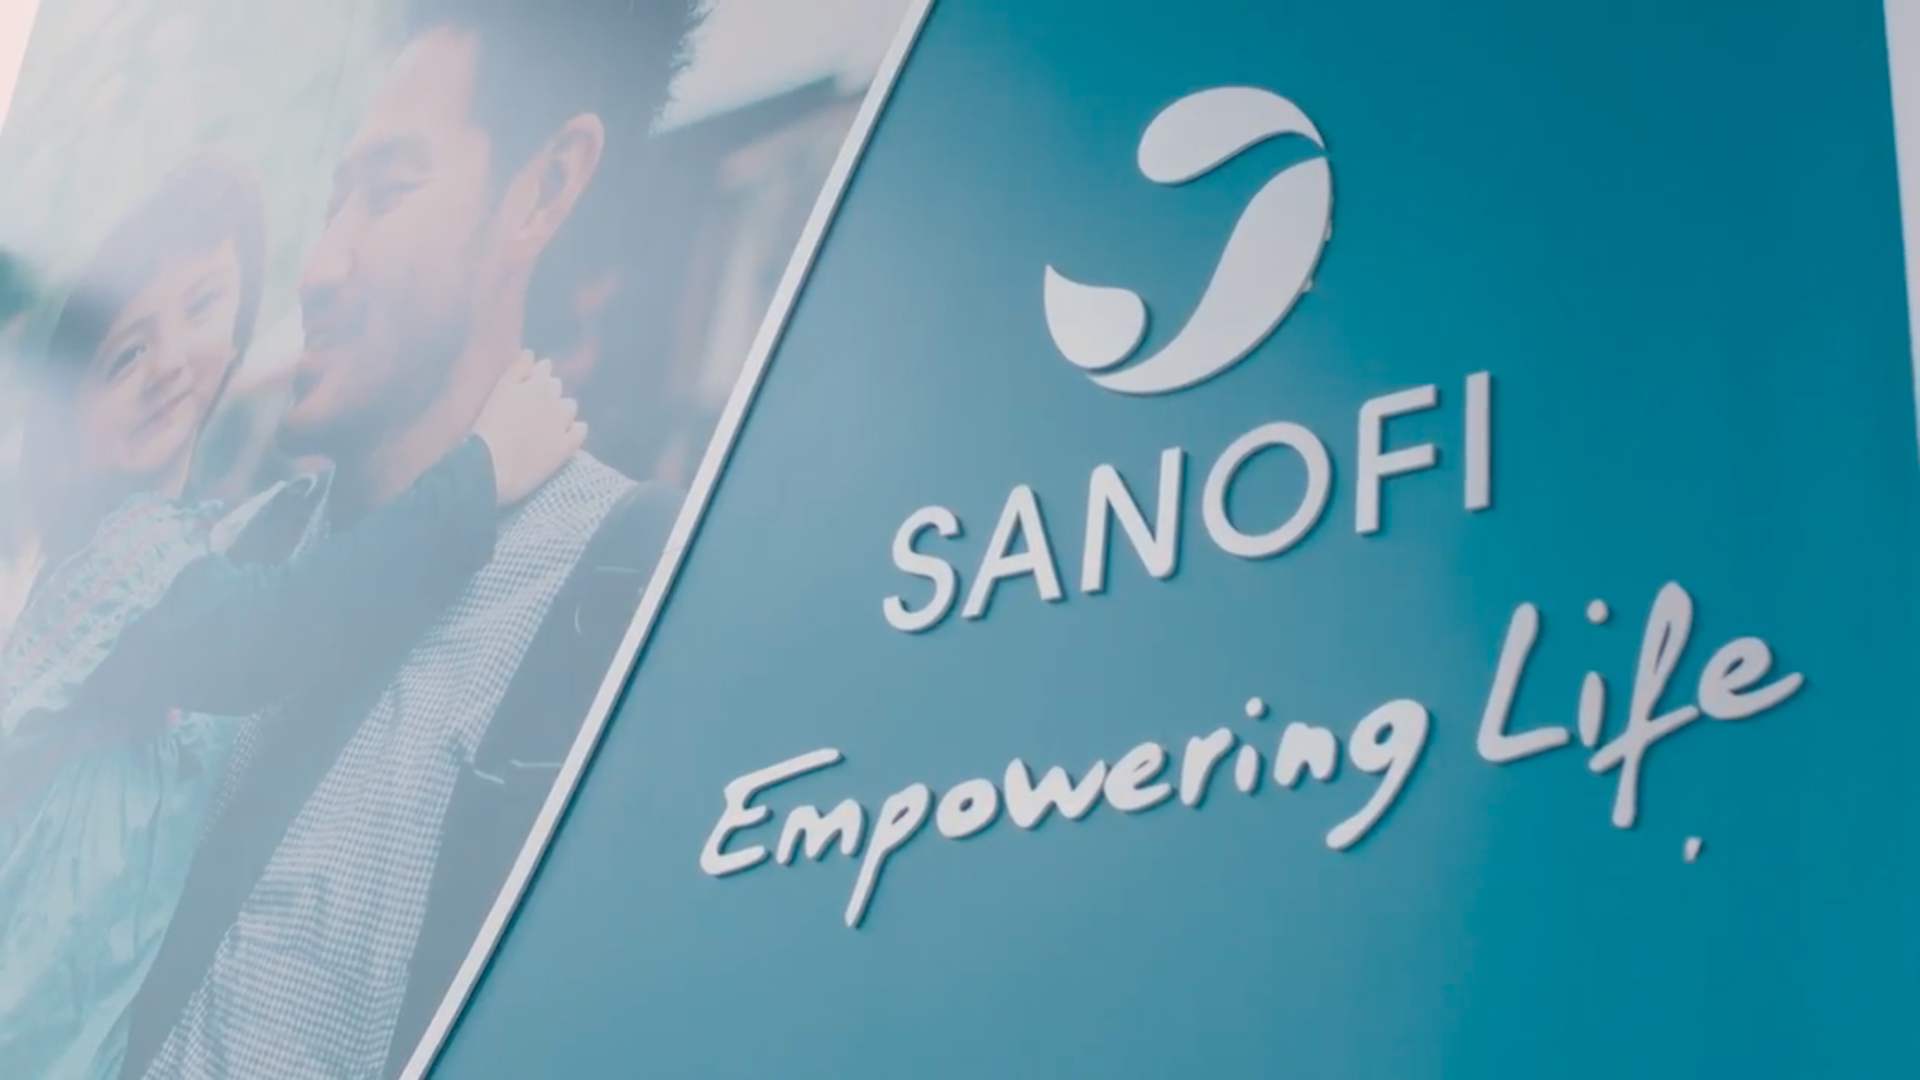 Sanofi Ευγενία Λιονή: Νέα επικεφαλής του Τμήματος Επικοινωνίας